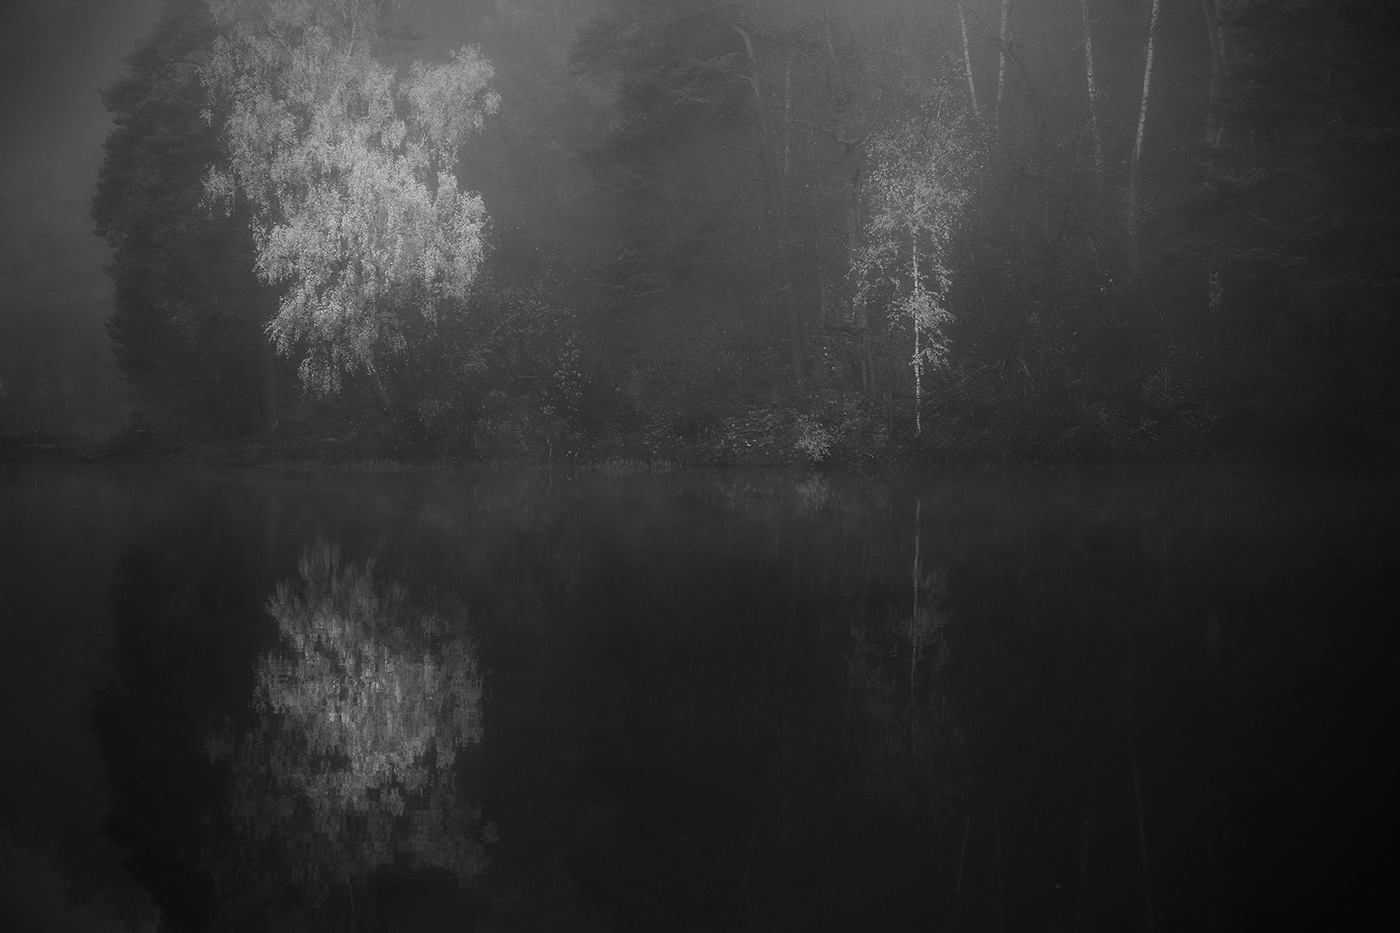 black and white fog fog landscapes lietuva lithuania Mindaugas Buivydas mist